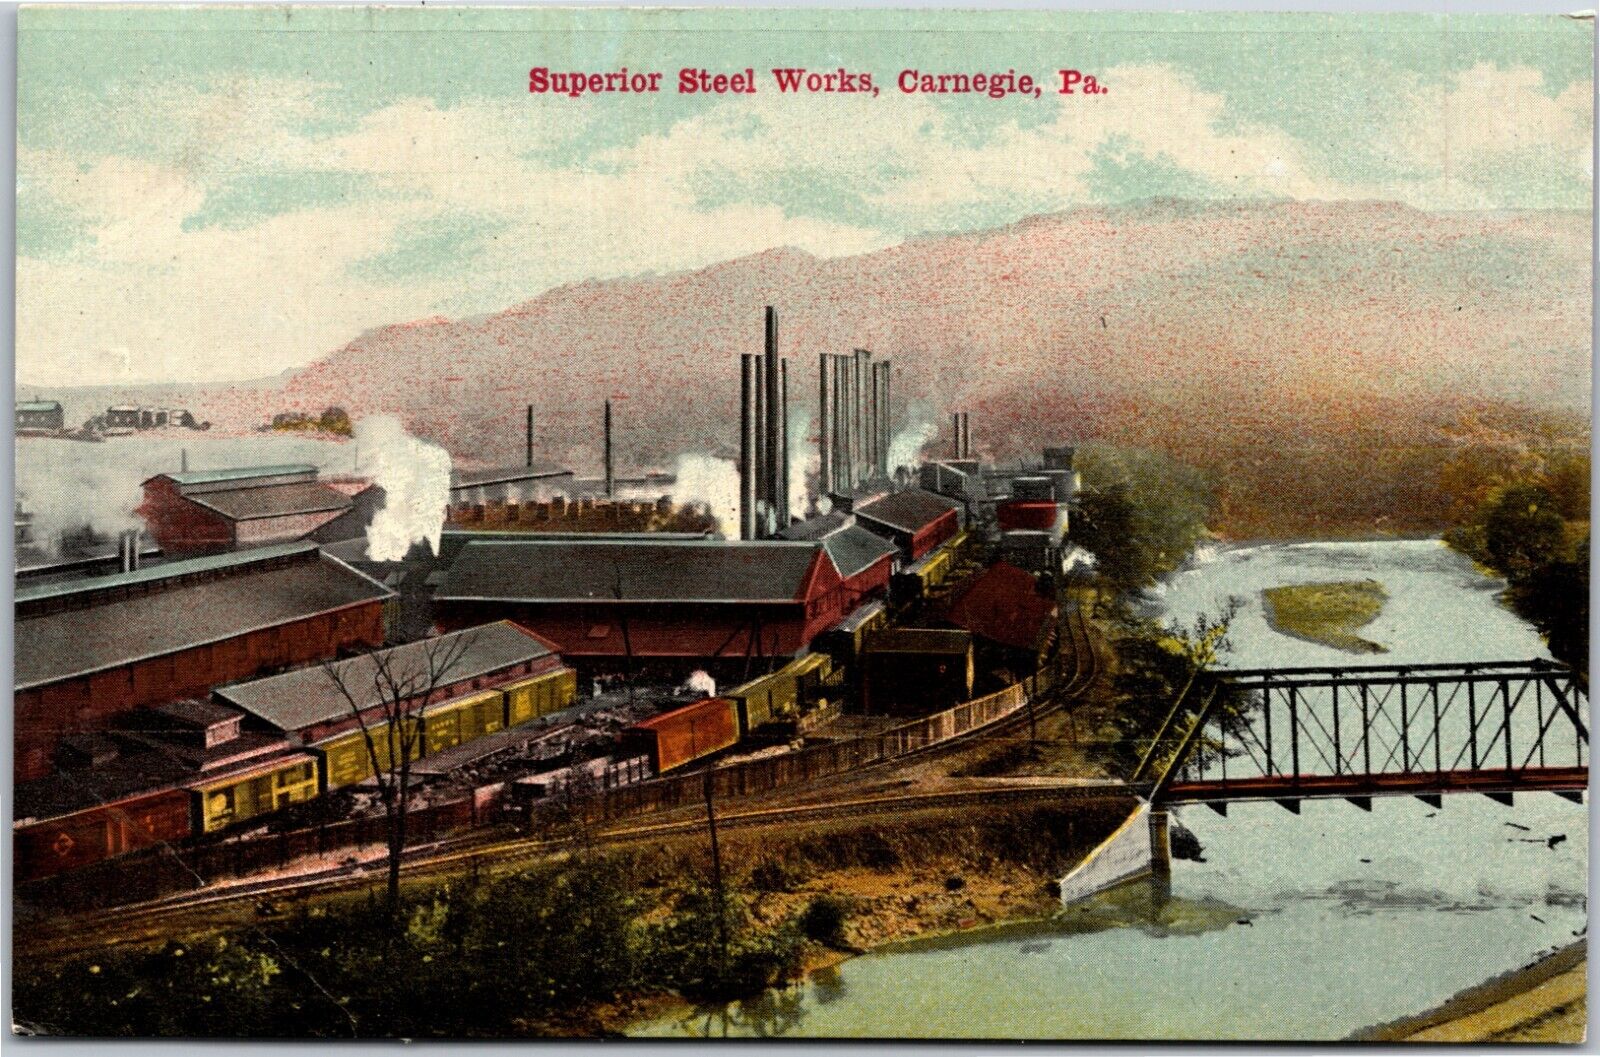 Carnegie PA Superior Steel Works Factory - Trains, Bridge c1910 Vintage Postcard